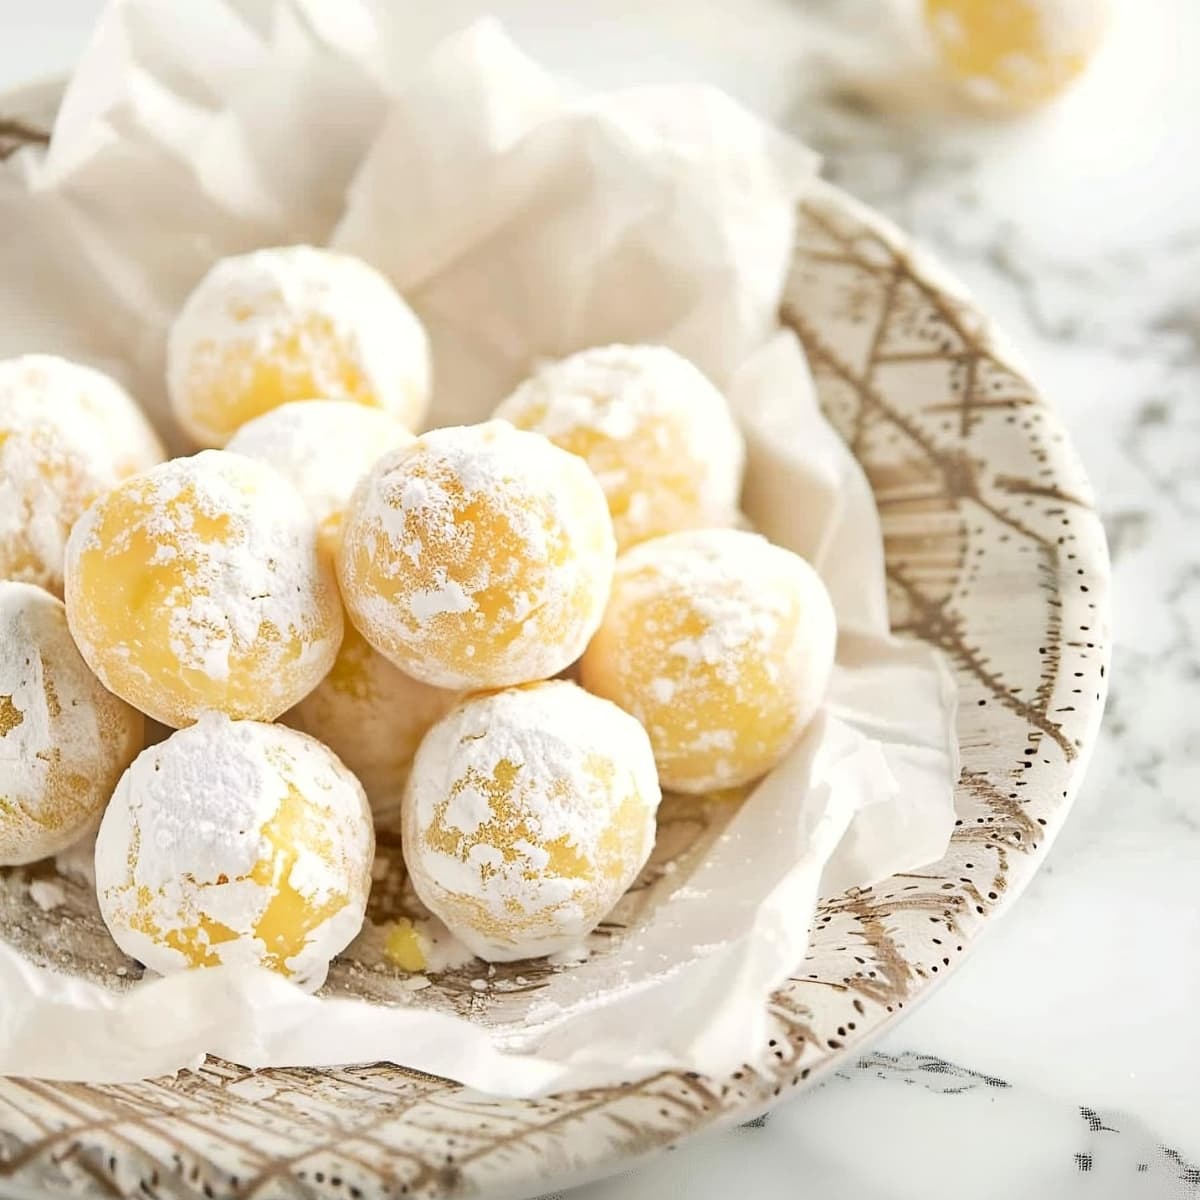 Rich and creamy white chocolate lemon truffles with powdered sugar